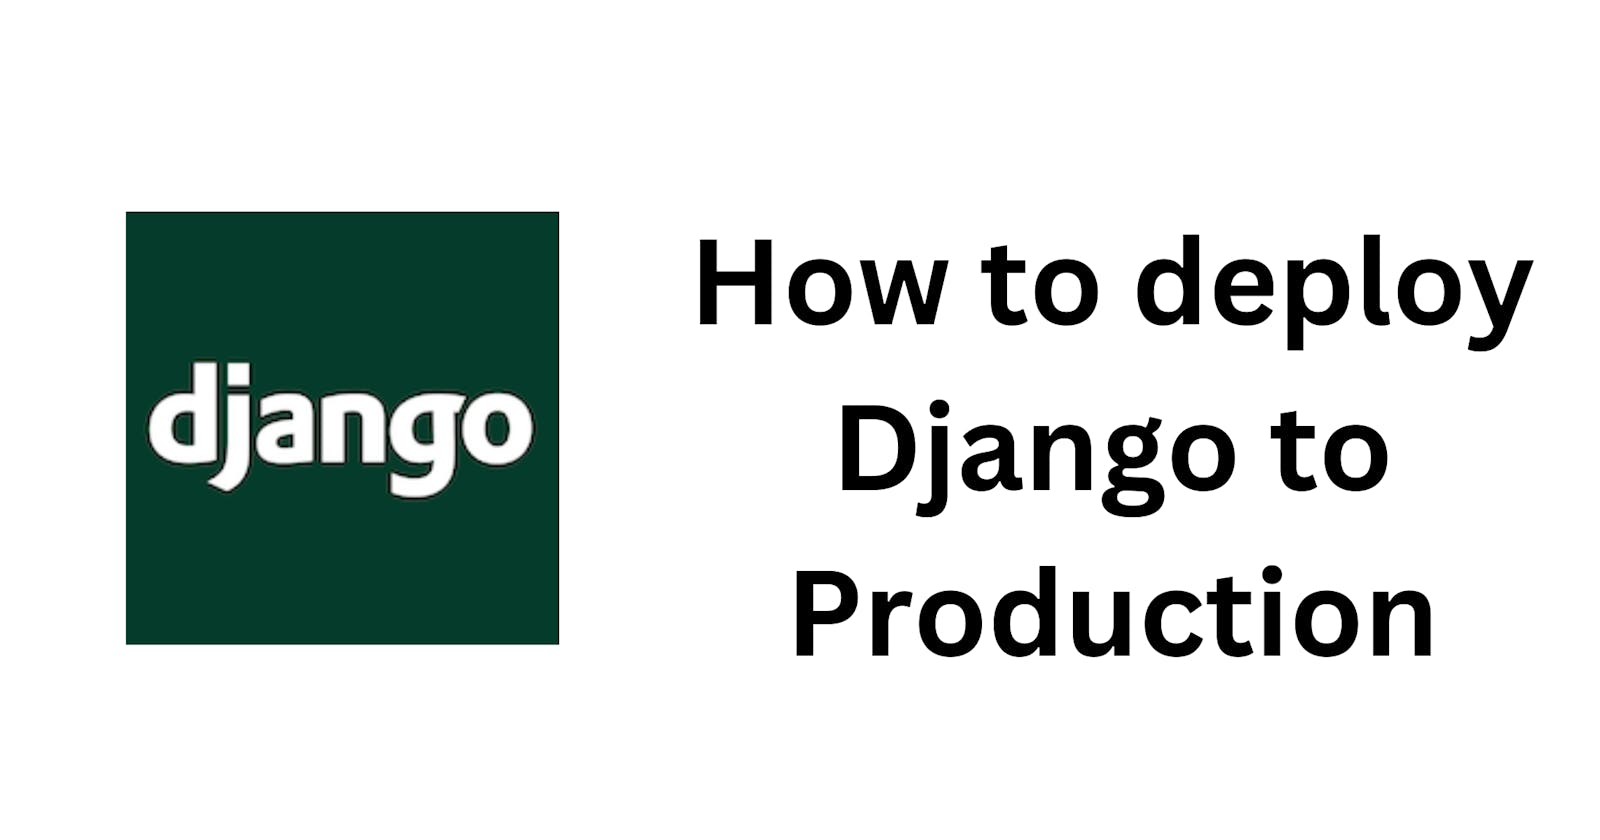 How to deploy a Django application